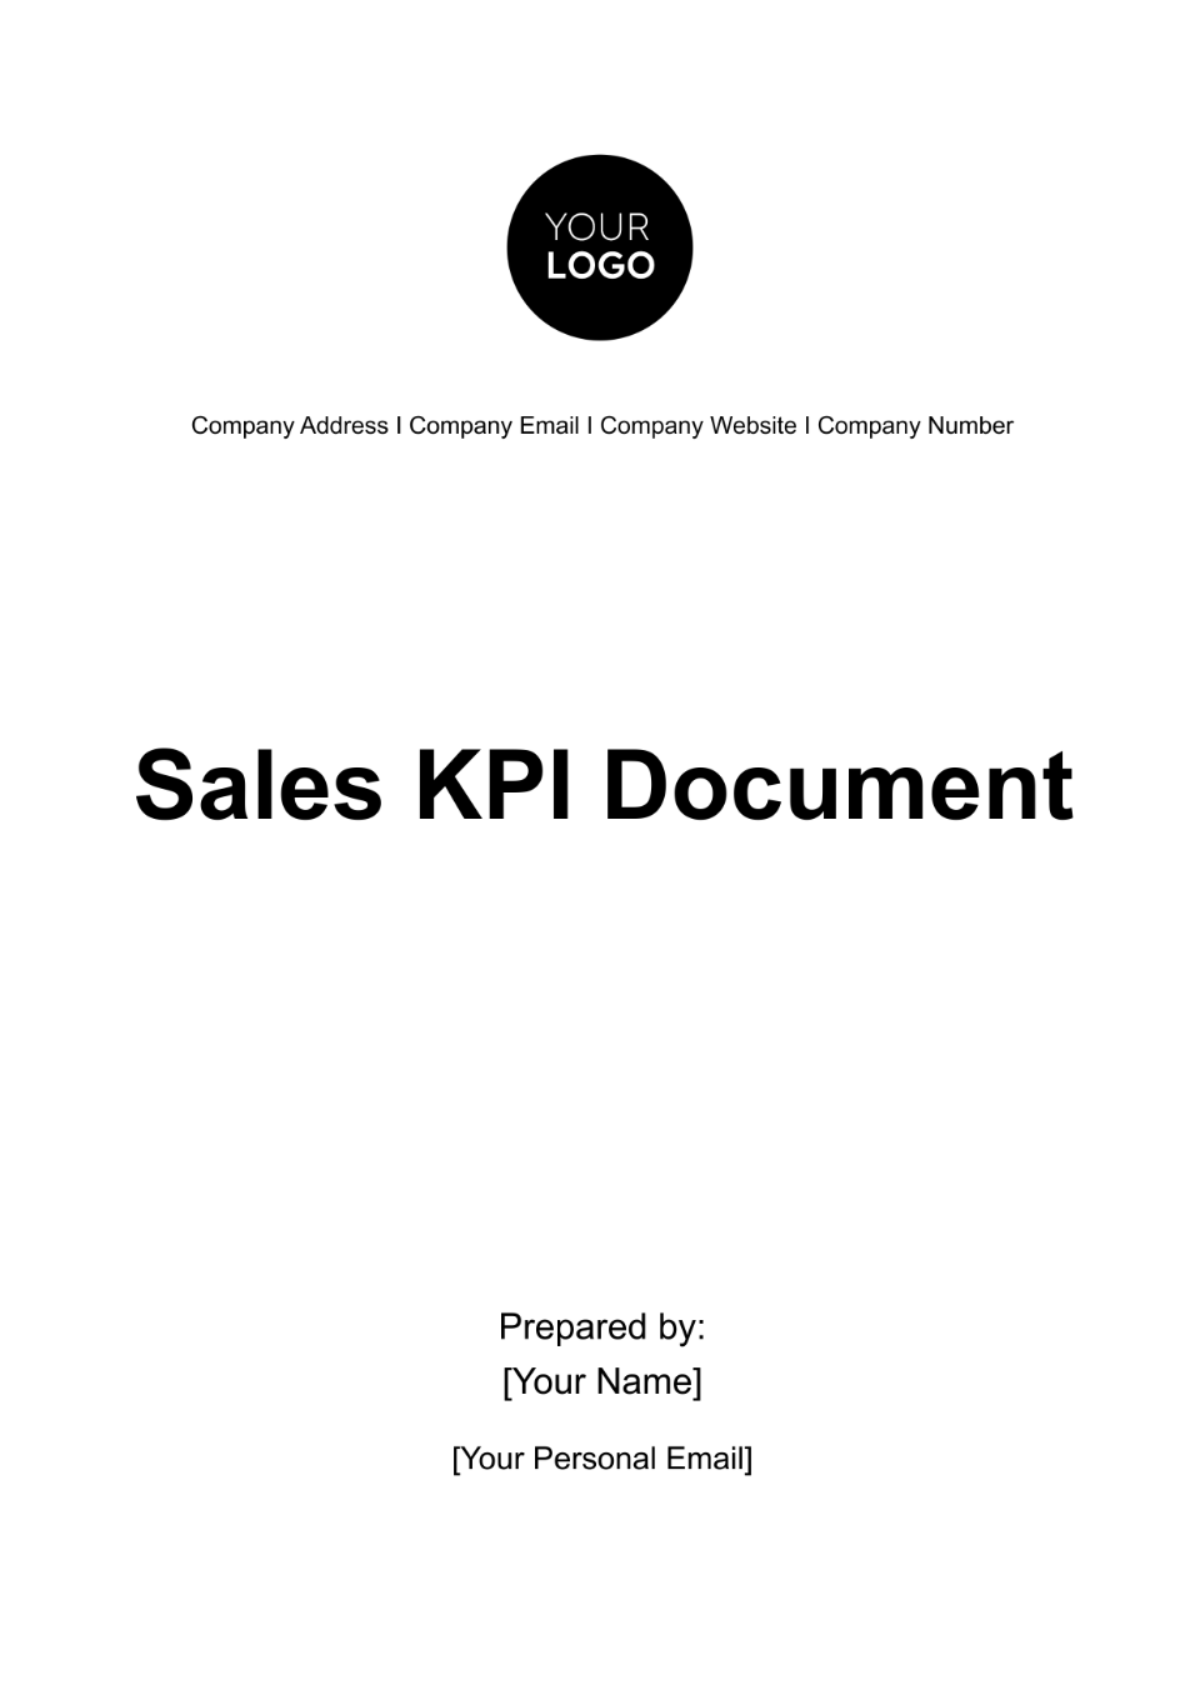 Free Sales KPI Document Template